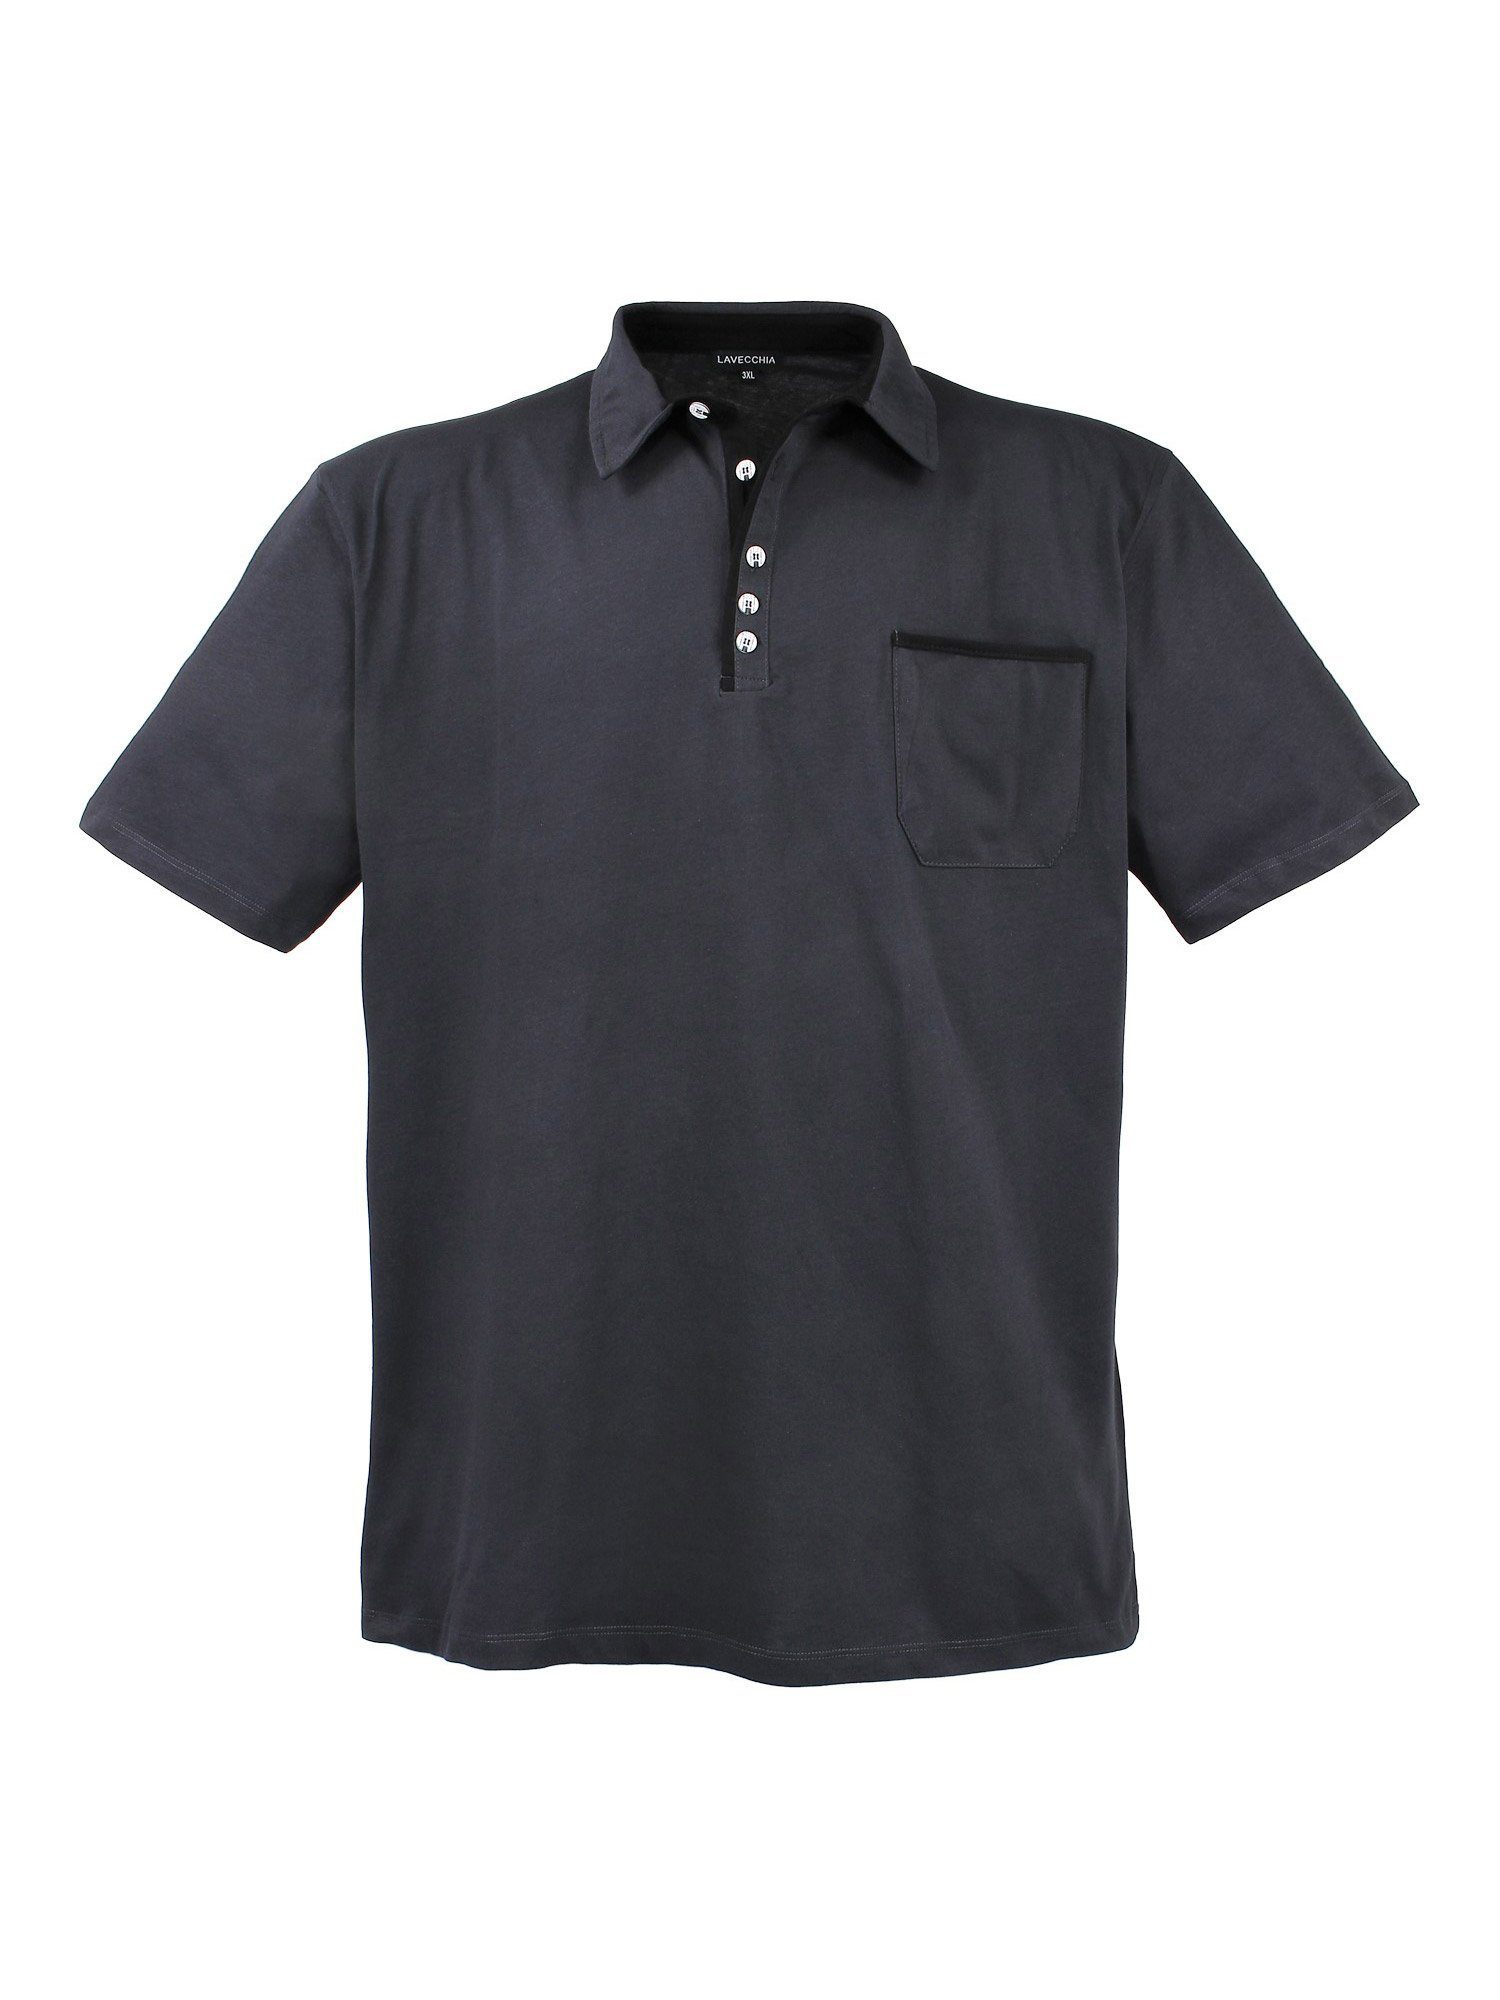 Lavecchia Poloshirt Übergrößen Herren Polo Shirt LV-1701 Shirt anthrazit Polo Herren